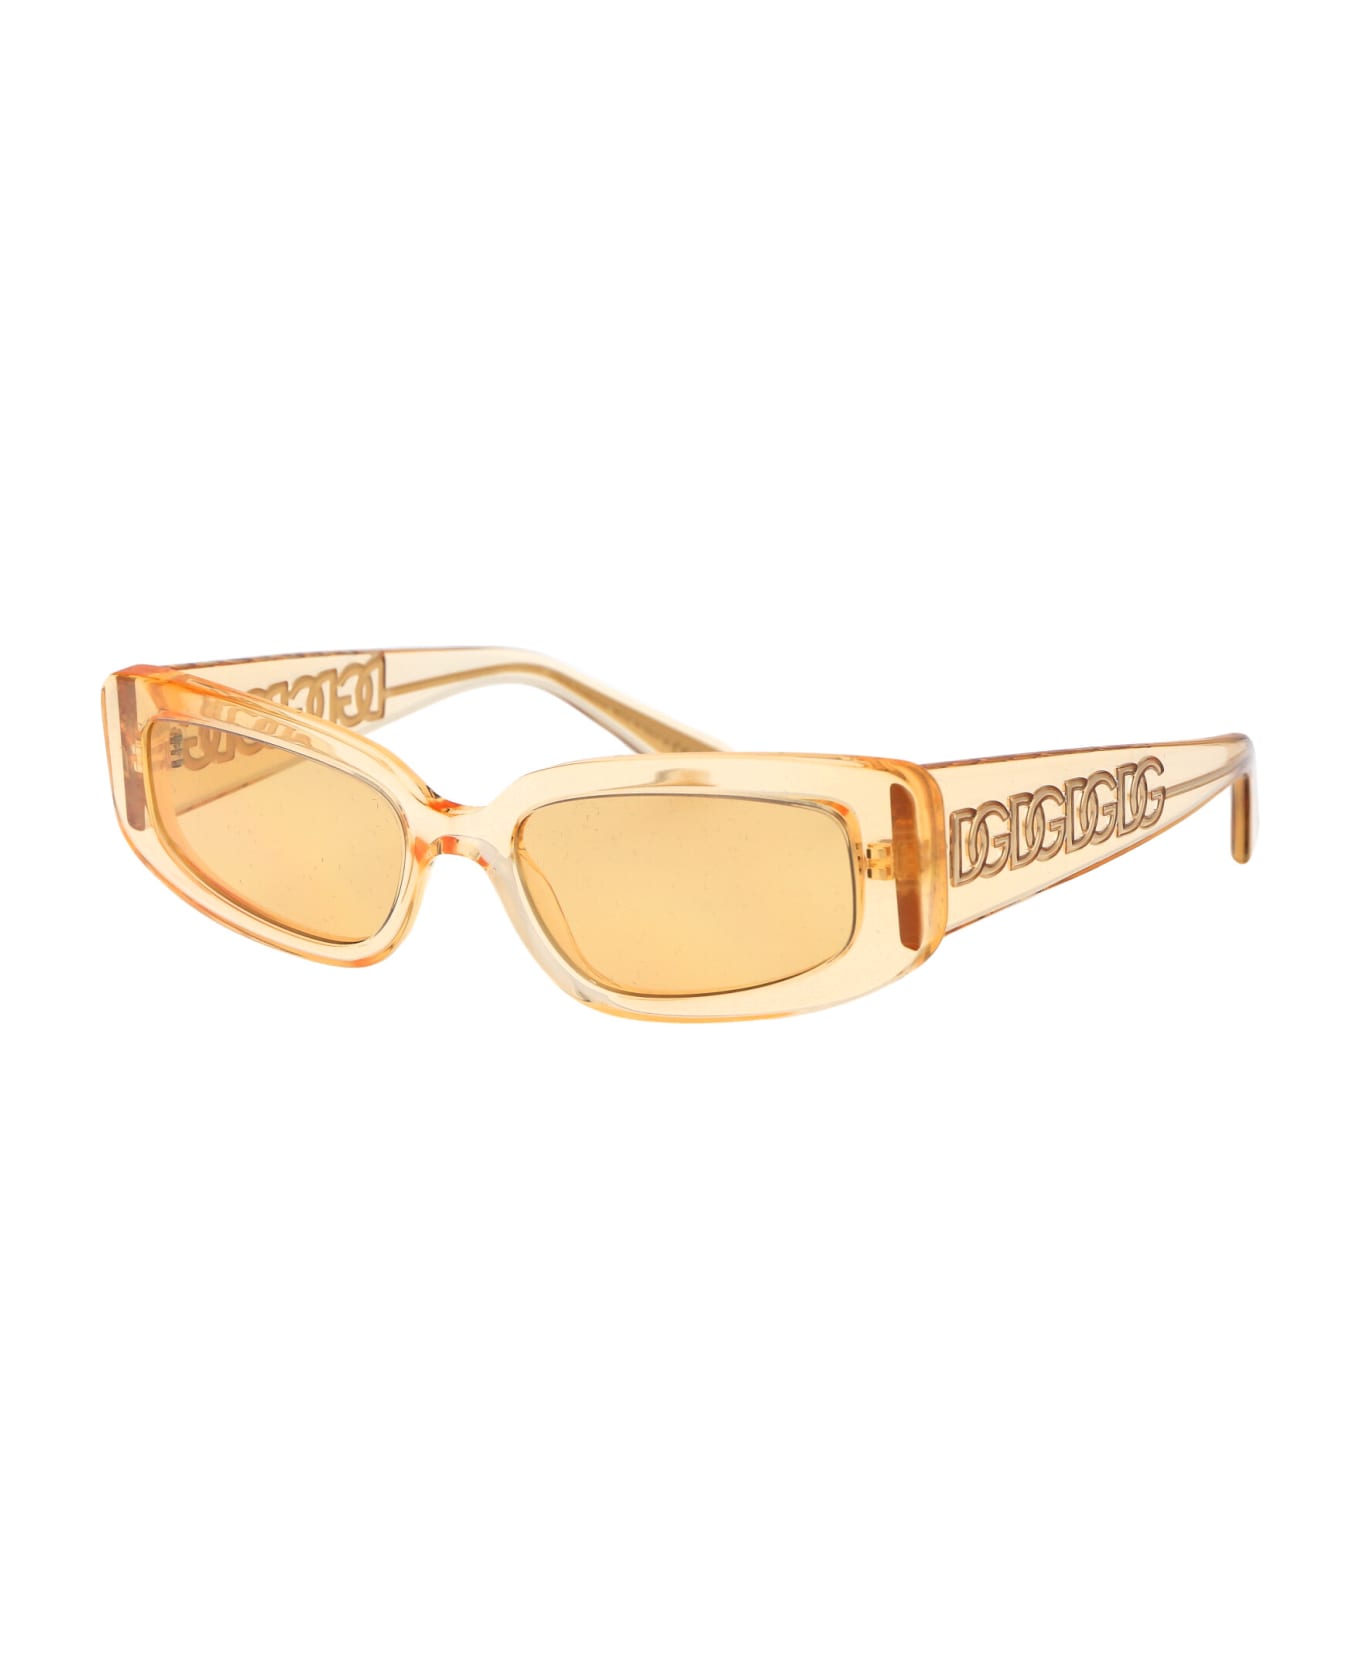 Dolce & Gabbana Eyewear 0dg4445 Sunglasses - 3046/7 Orange Transparent